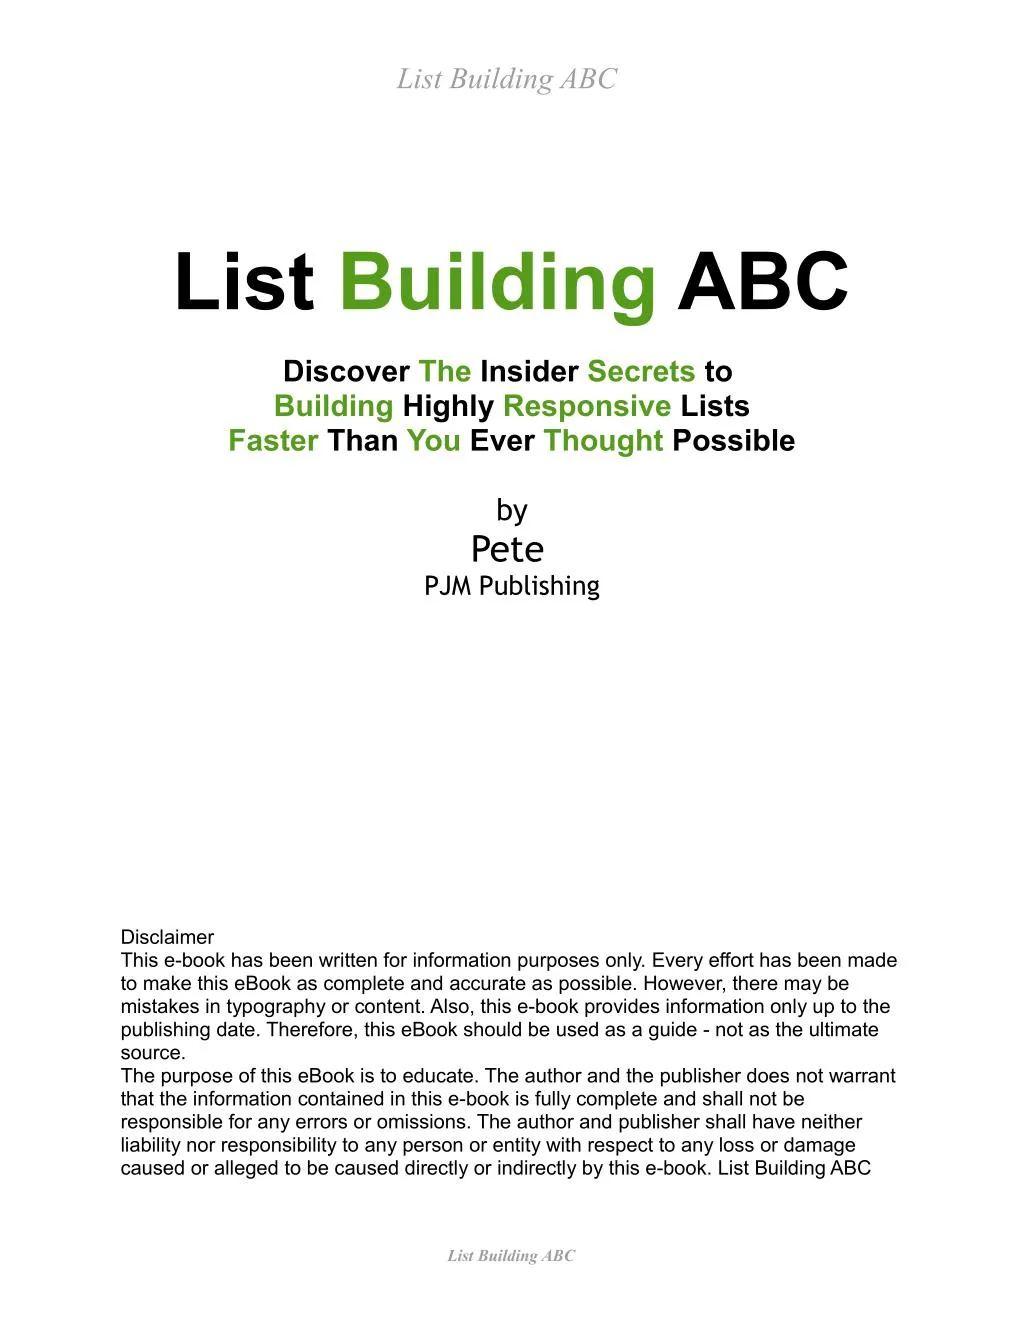 list building abc